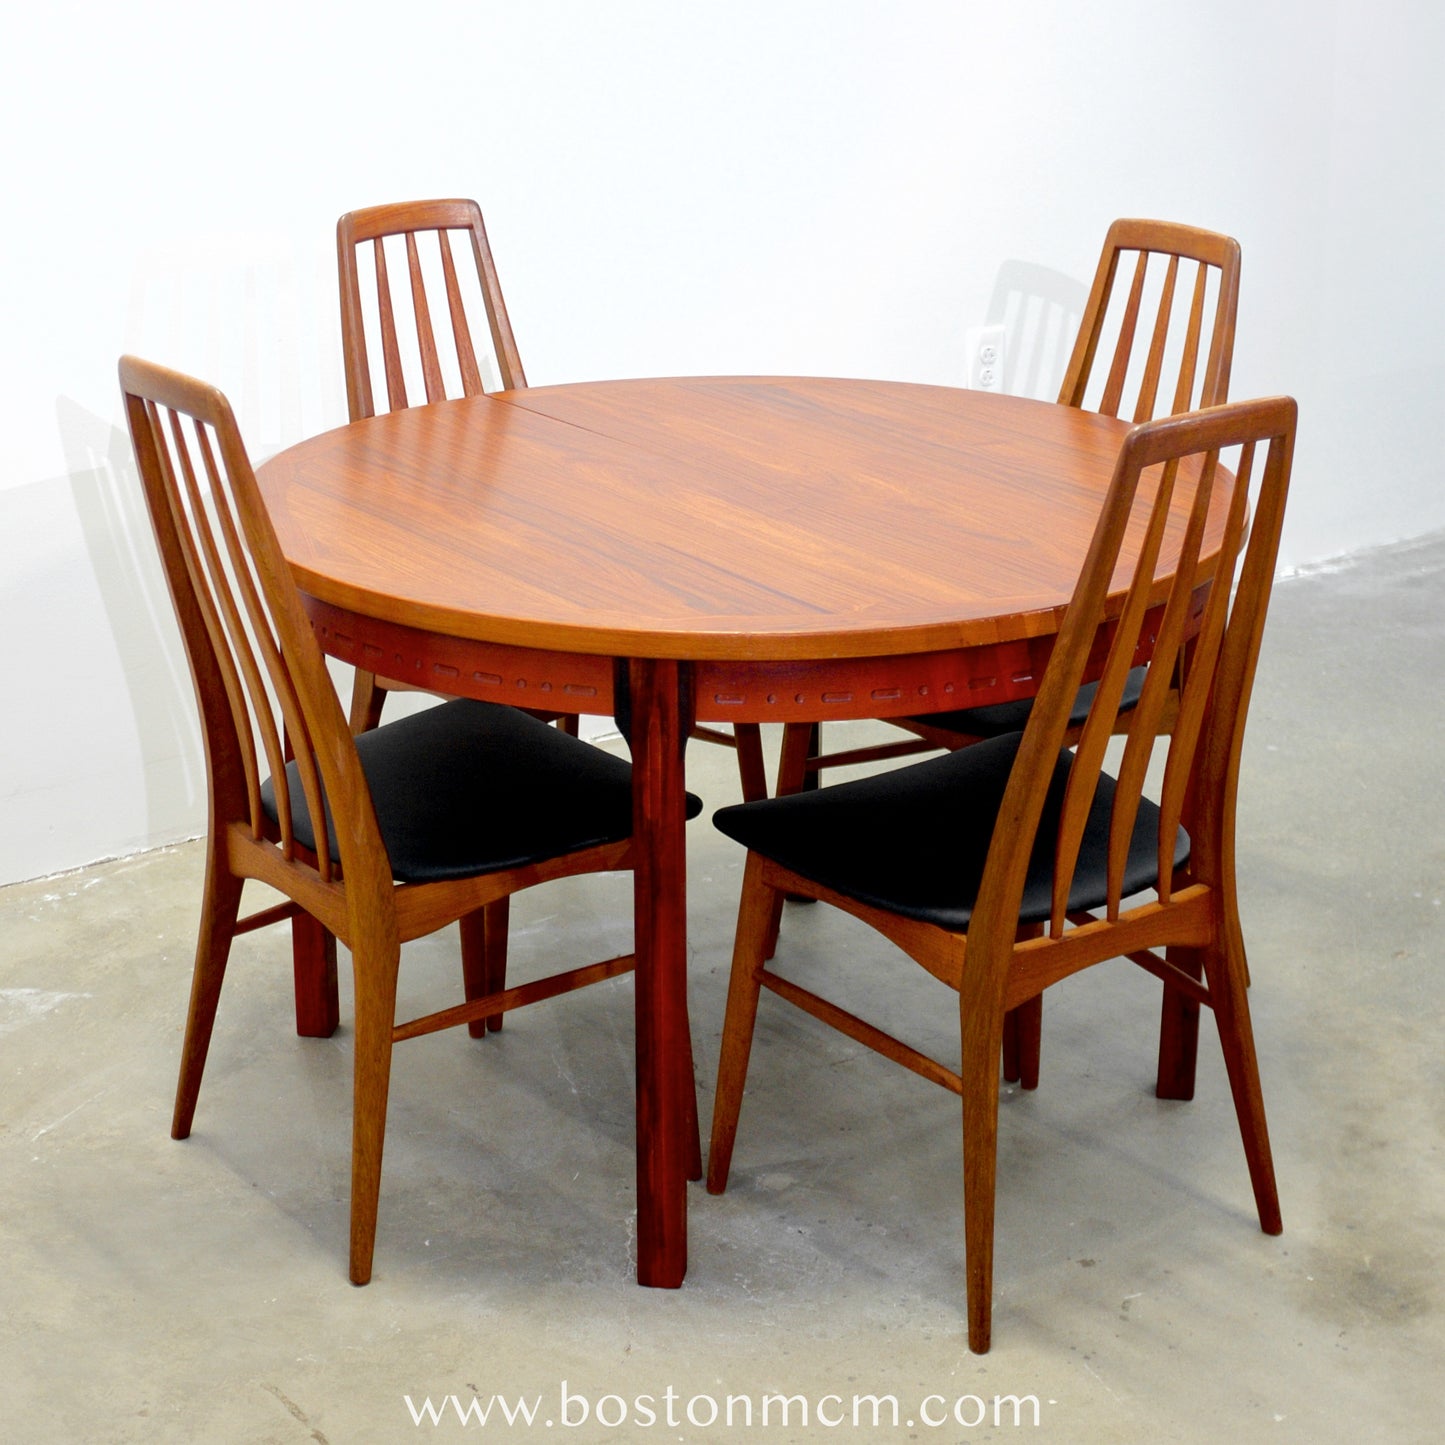 Troeds Bjärnum Rosewood  "Rimbo" Dining Table Designed by Leif & Bengt Troedsson